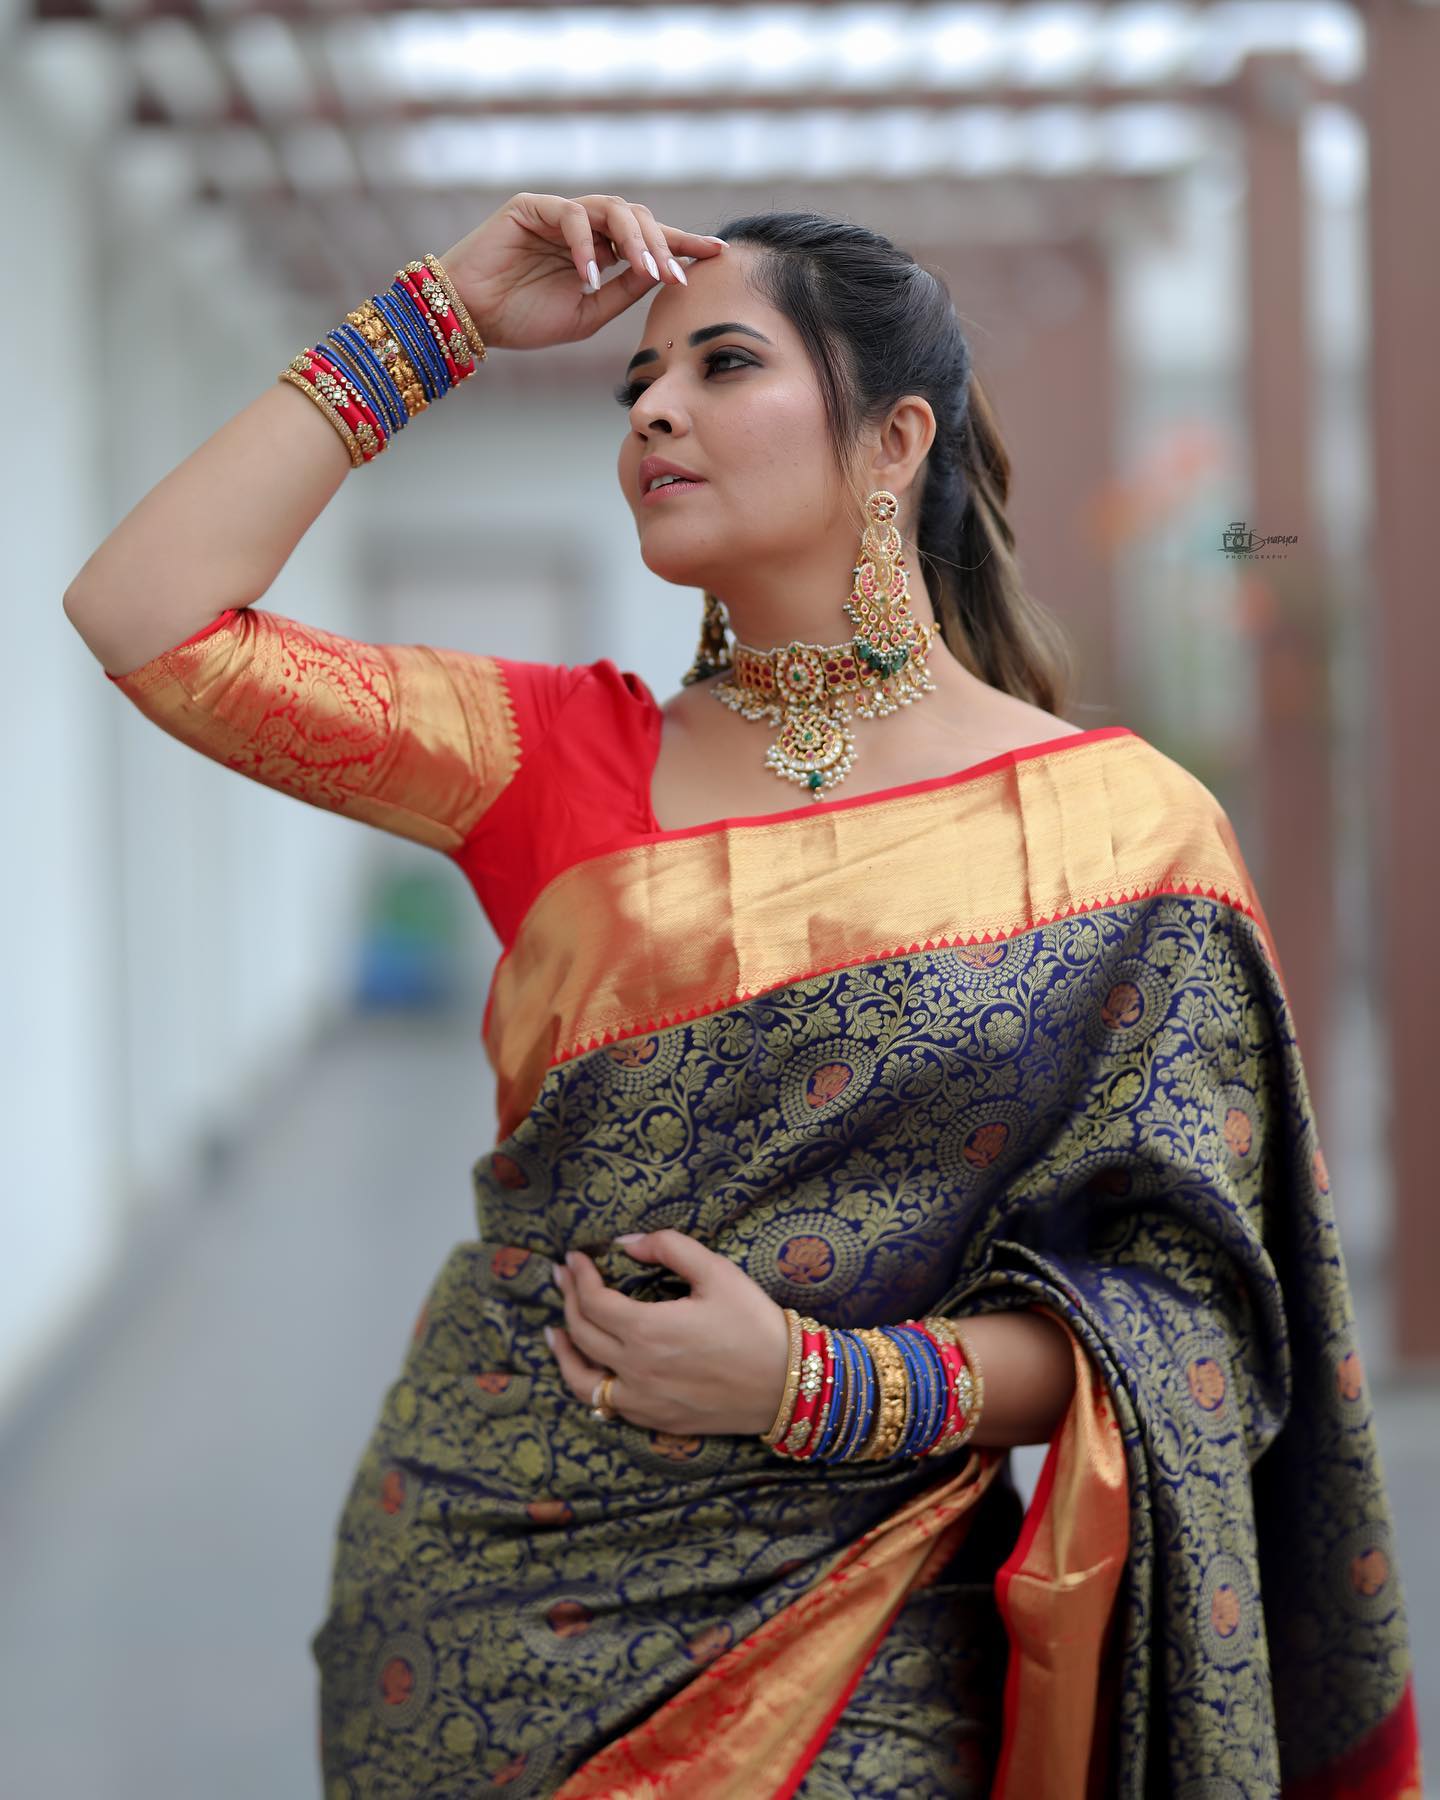 Anasuya Bhardwaj endearing pics in saree